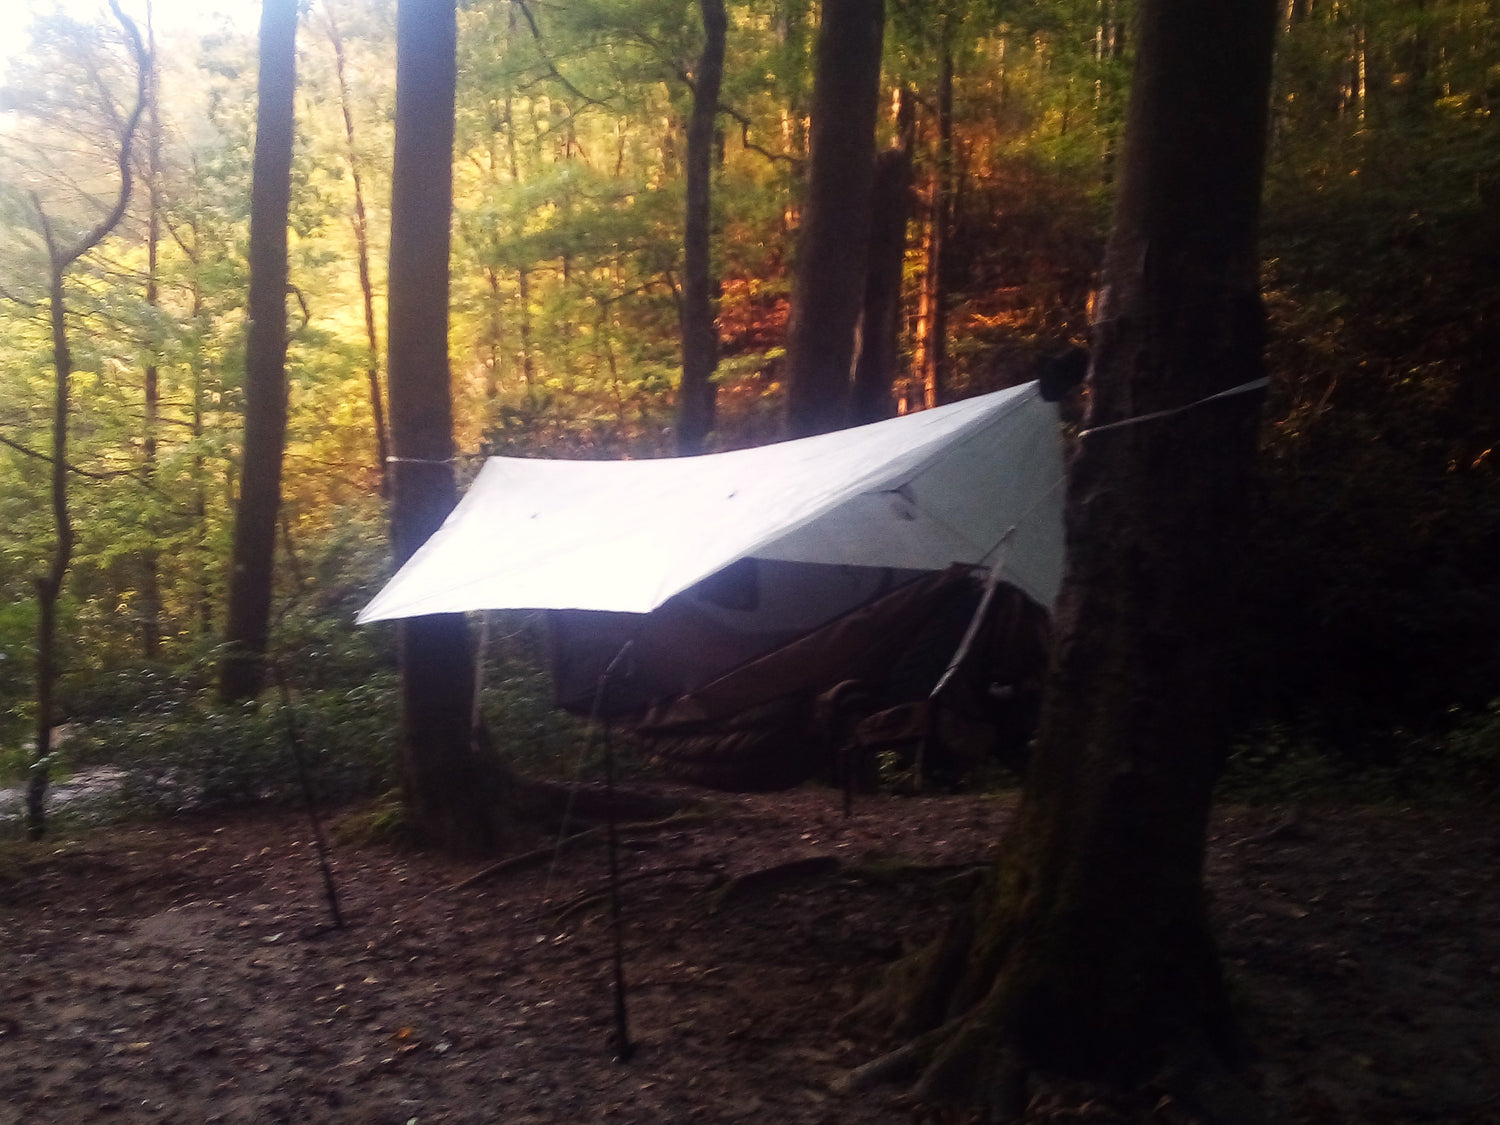 ultralight camping hammock custom made dream hammock with bugnet or mosquito net